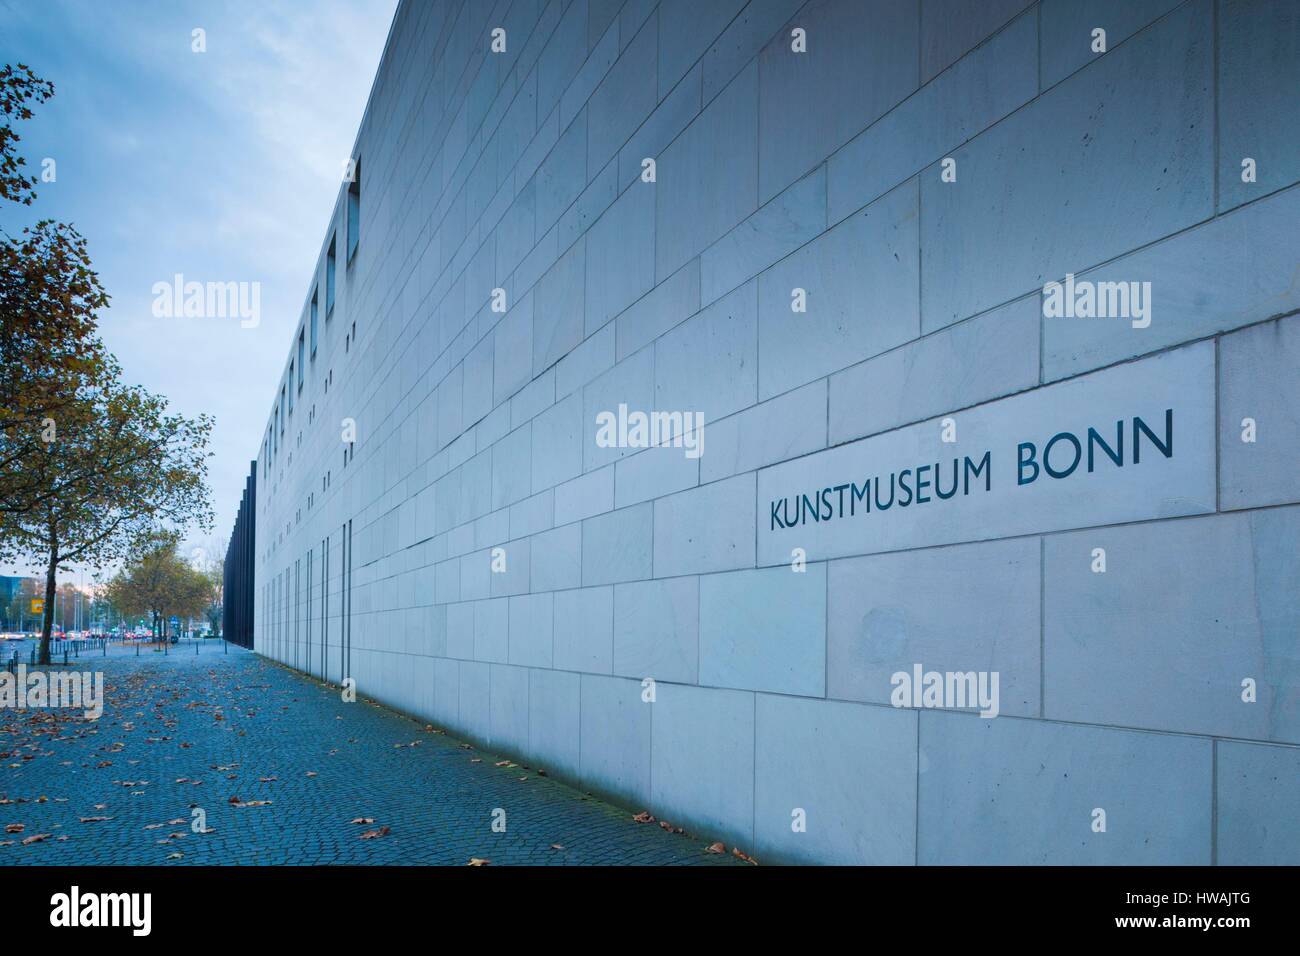 Germany, Nordrhein-Westfalen, Bonn, Museumsmeile, Kunstmuseum Bonn, art museum, sign Stock Photo